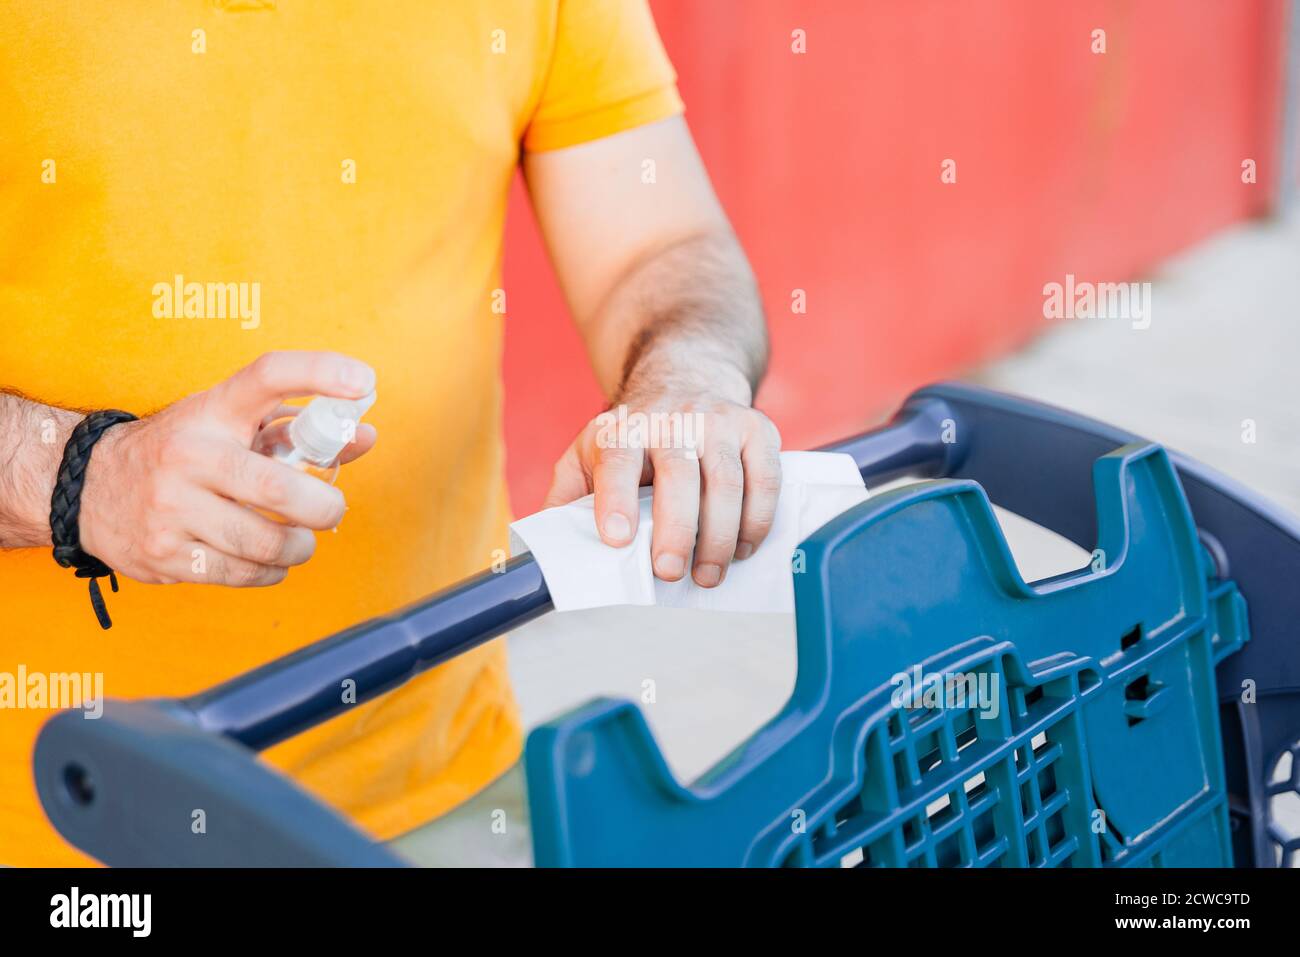 Man cleaning handle of shopping cart using antivirus antibacterial wet wipe. Stock Photo